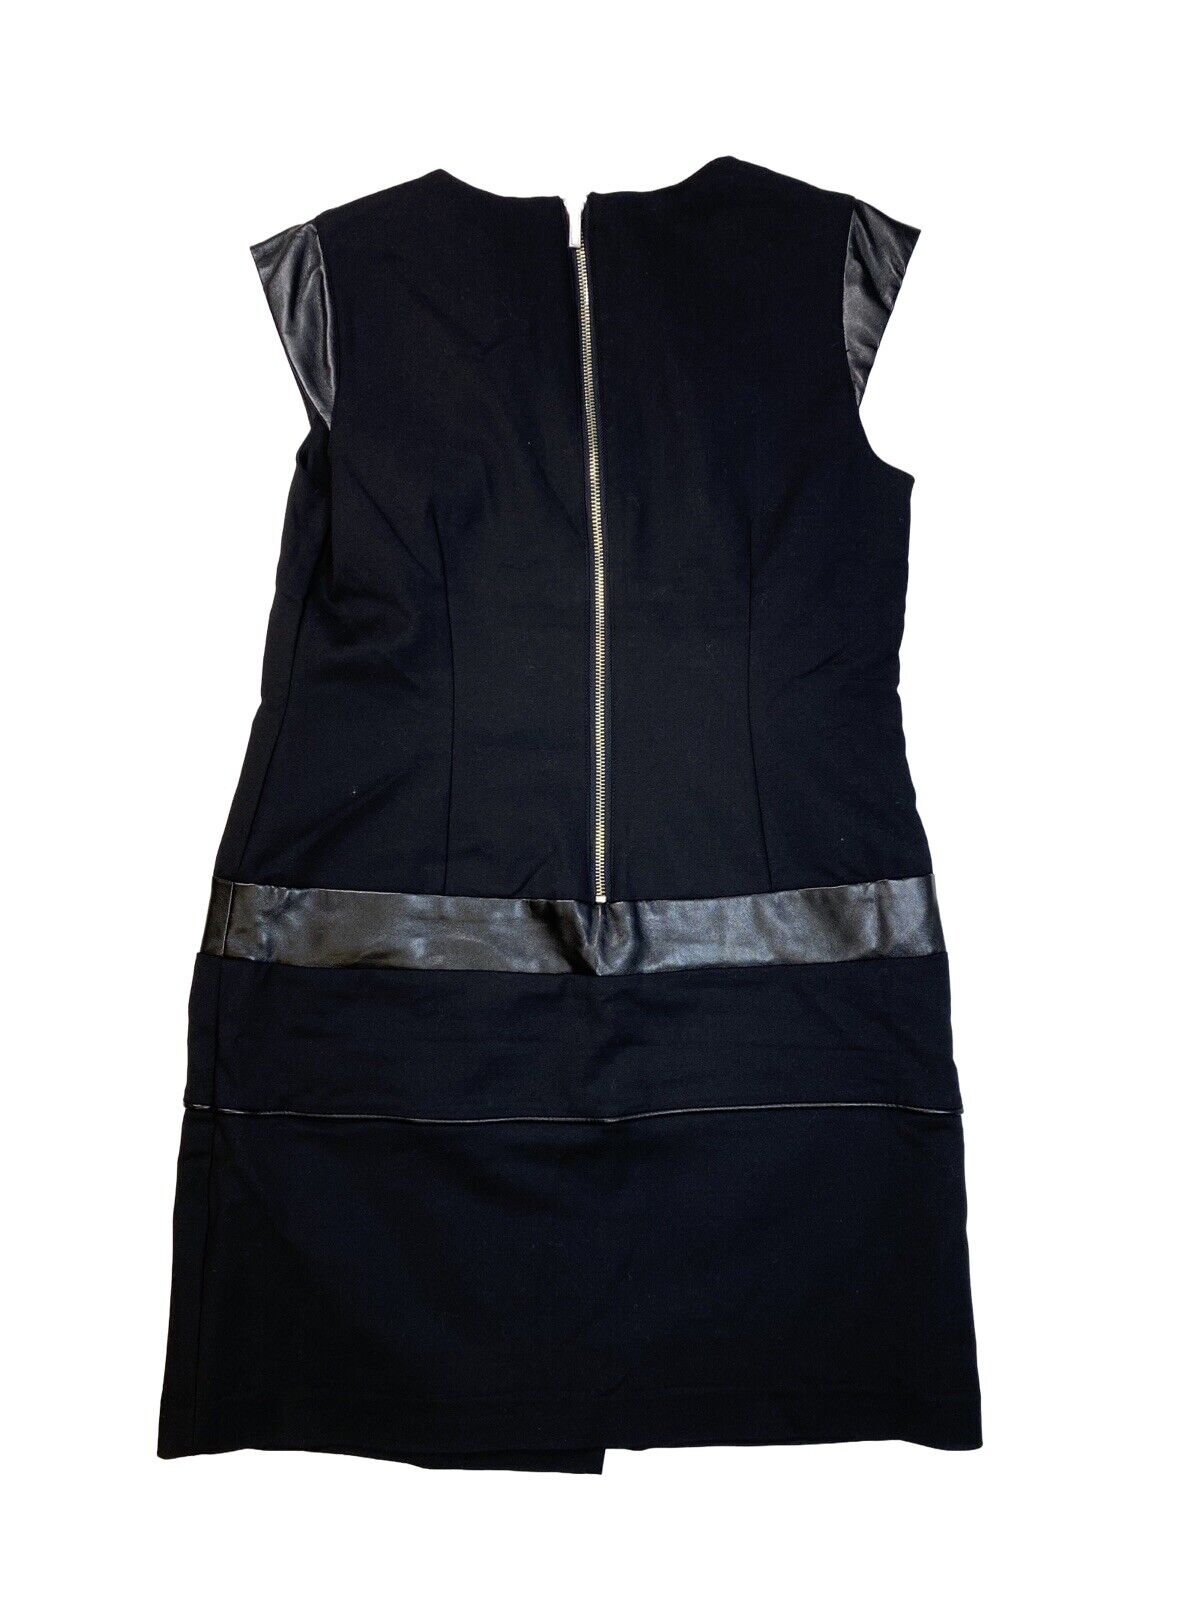 NEW Vivienne Tam Women's Black Sleeveless Olympia Sheath Dress - 6 Petite